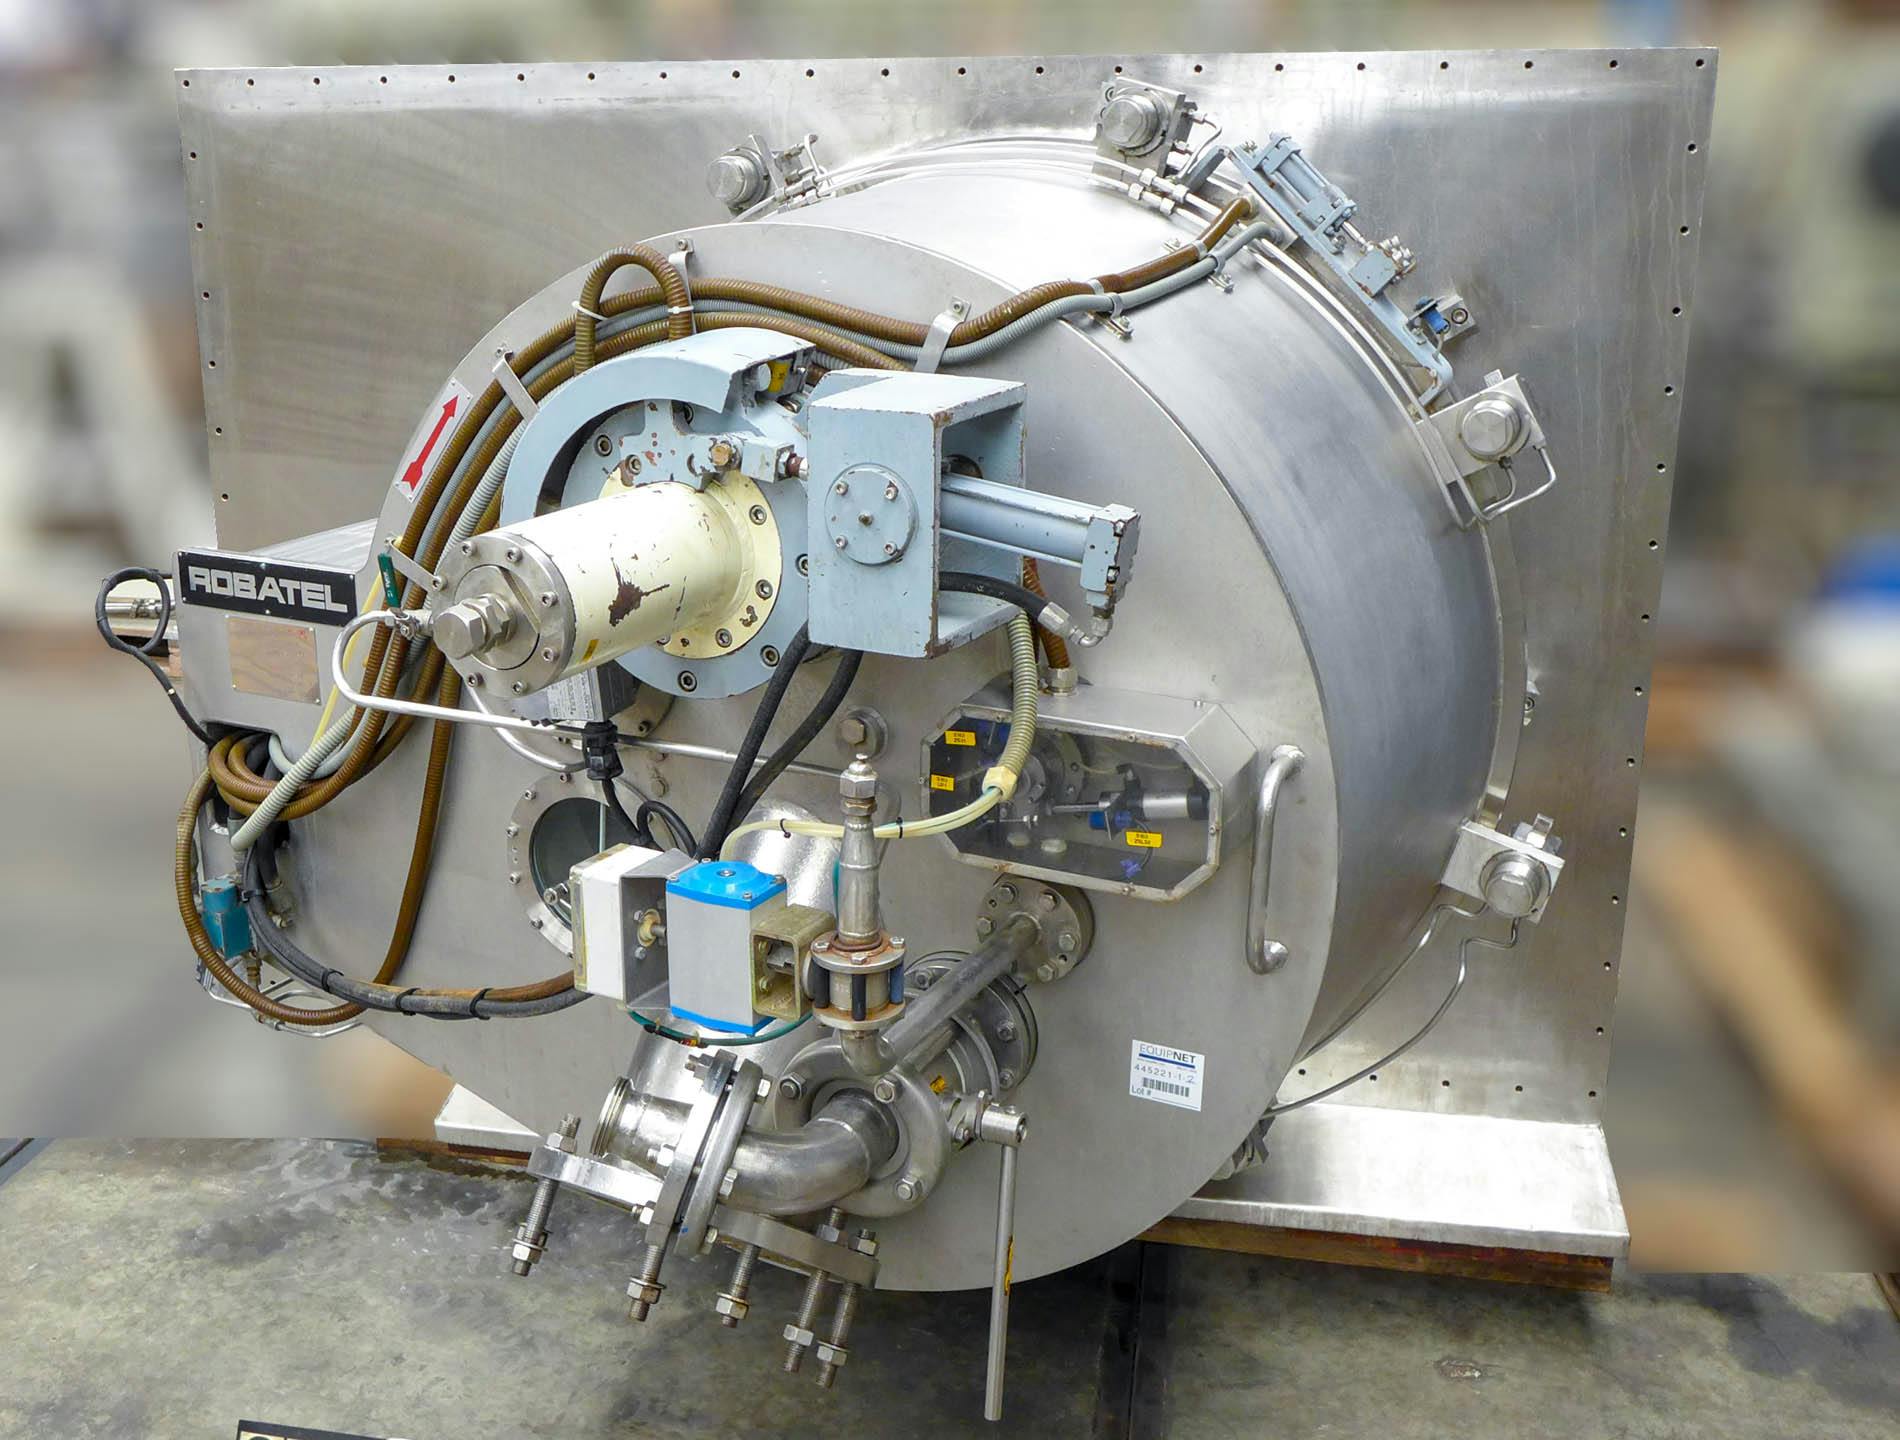 Robatel horizontal peeler centrifuge - Centrifugeuse à couteau racleur - image 3